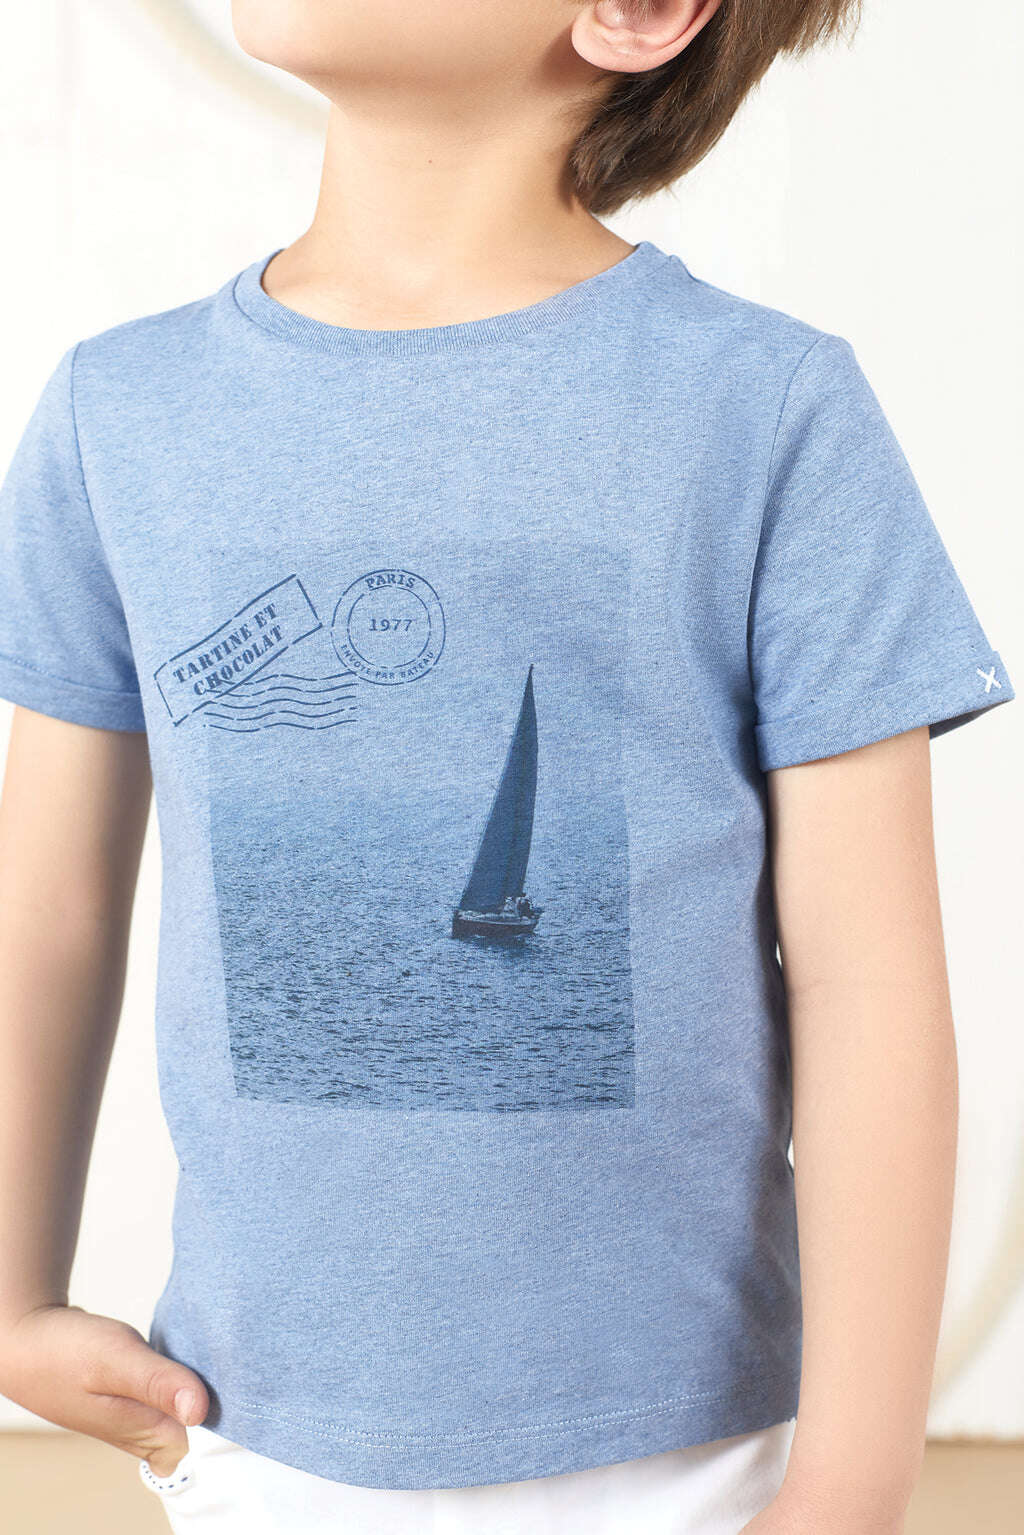 Tee-shirt - Jersey Bleu marin  illustration